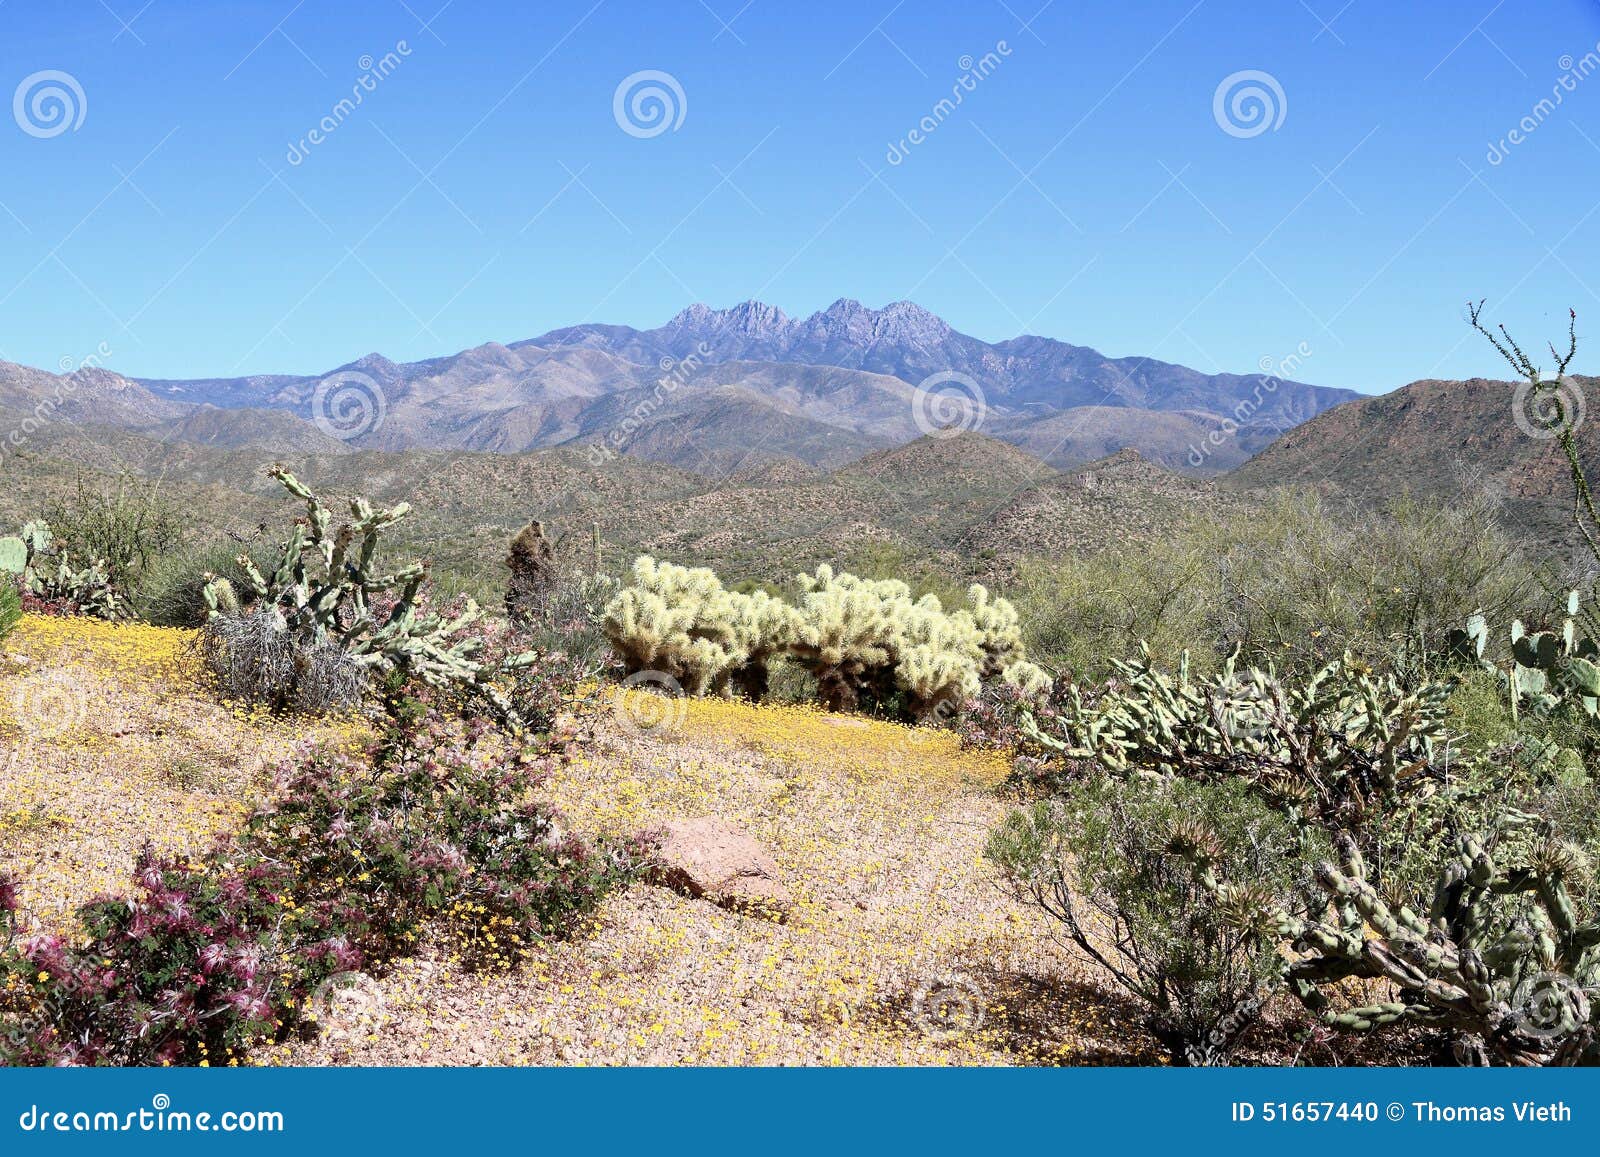 arizona, sonoran desert: spring flowers at the foothills of four peaks